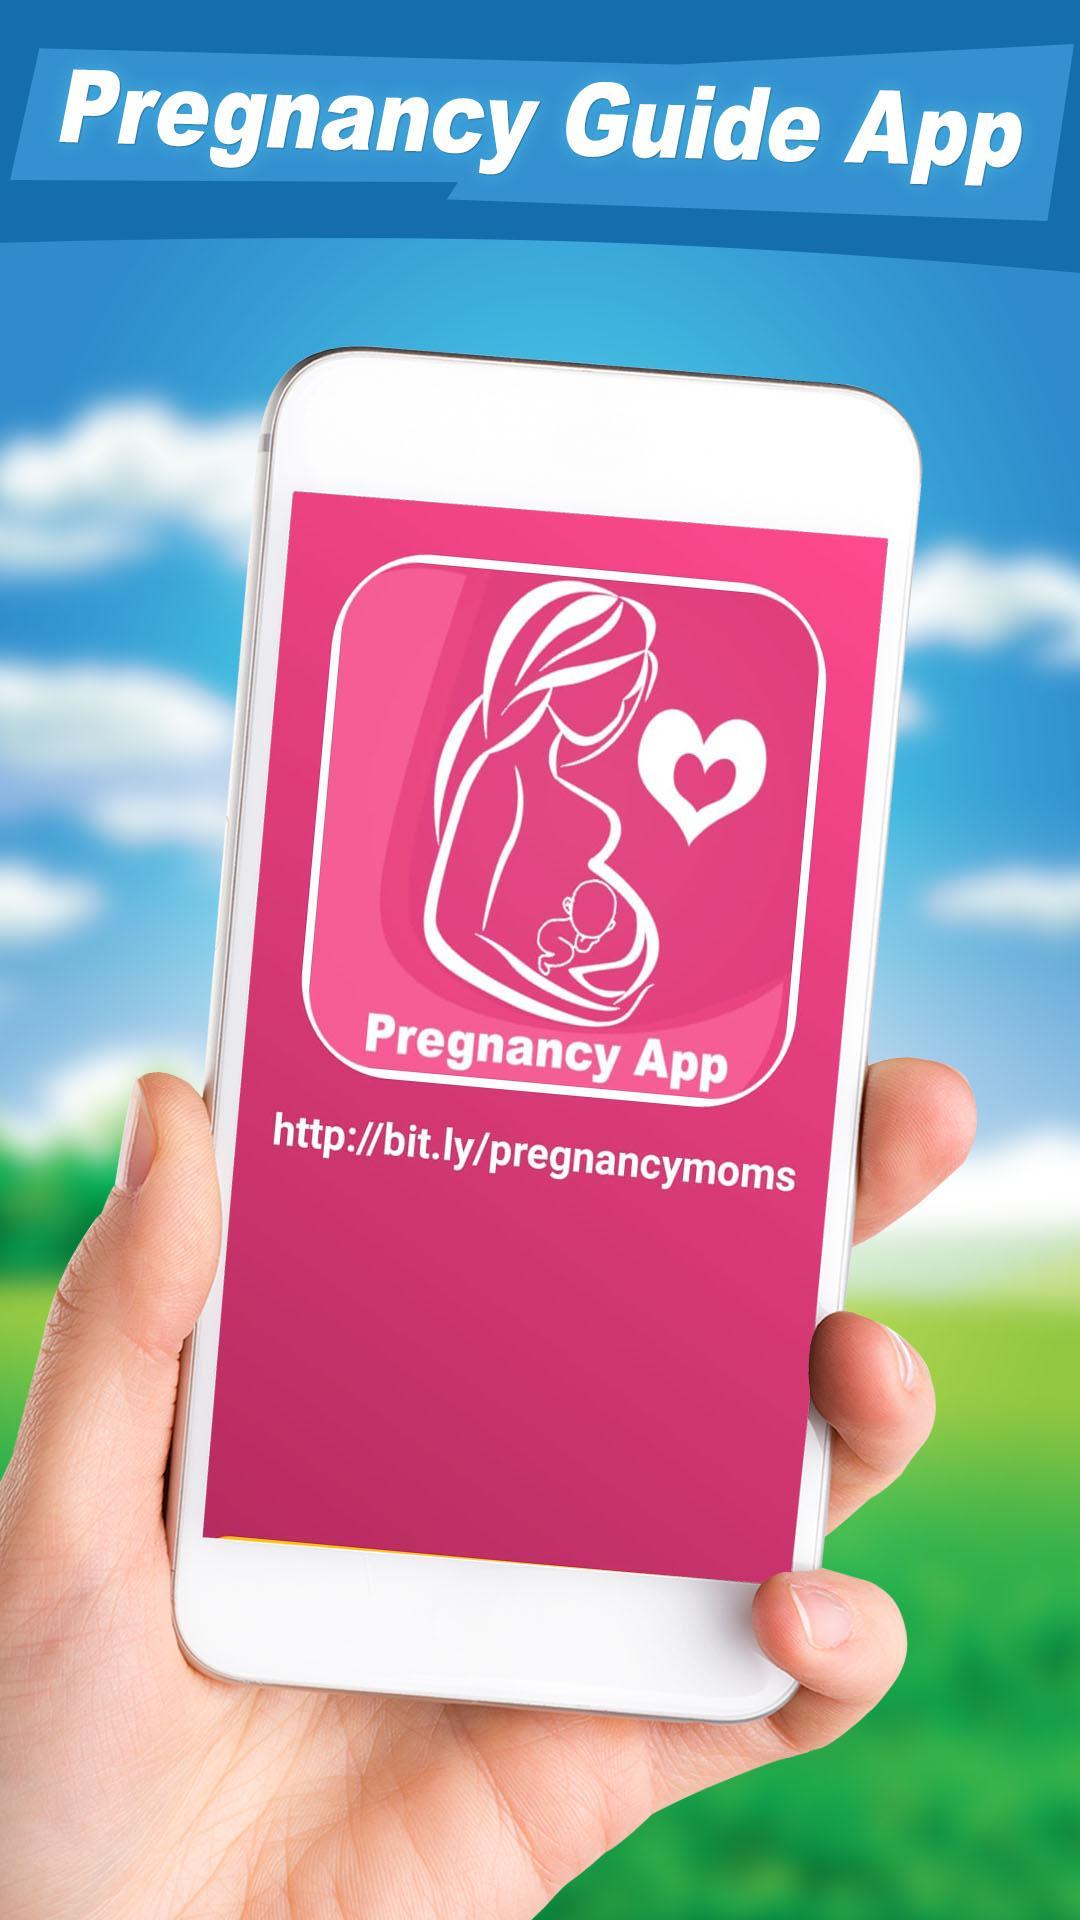 Pregnancy Guide App Pregnancy Guide App 4.0 Screenshot 7